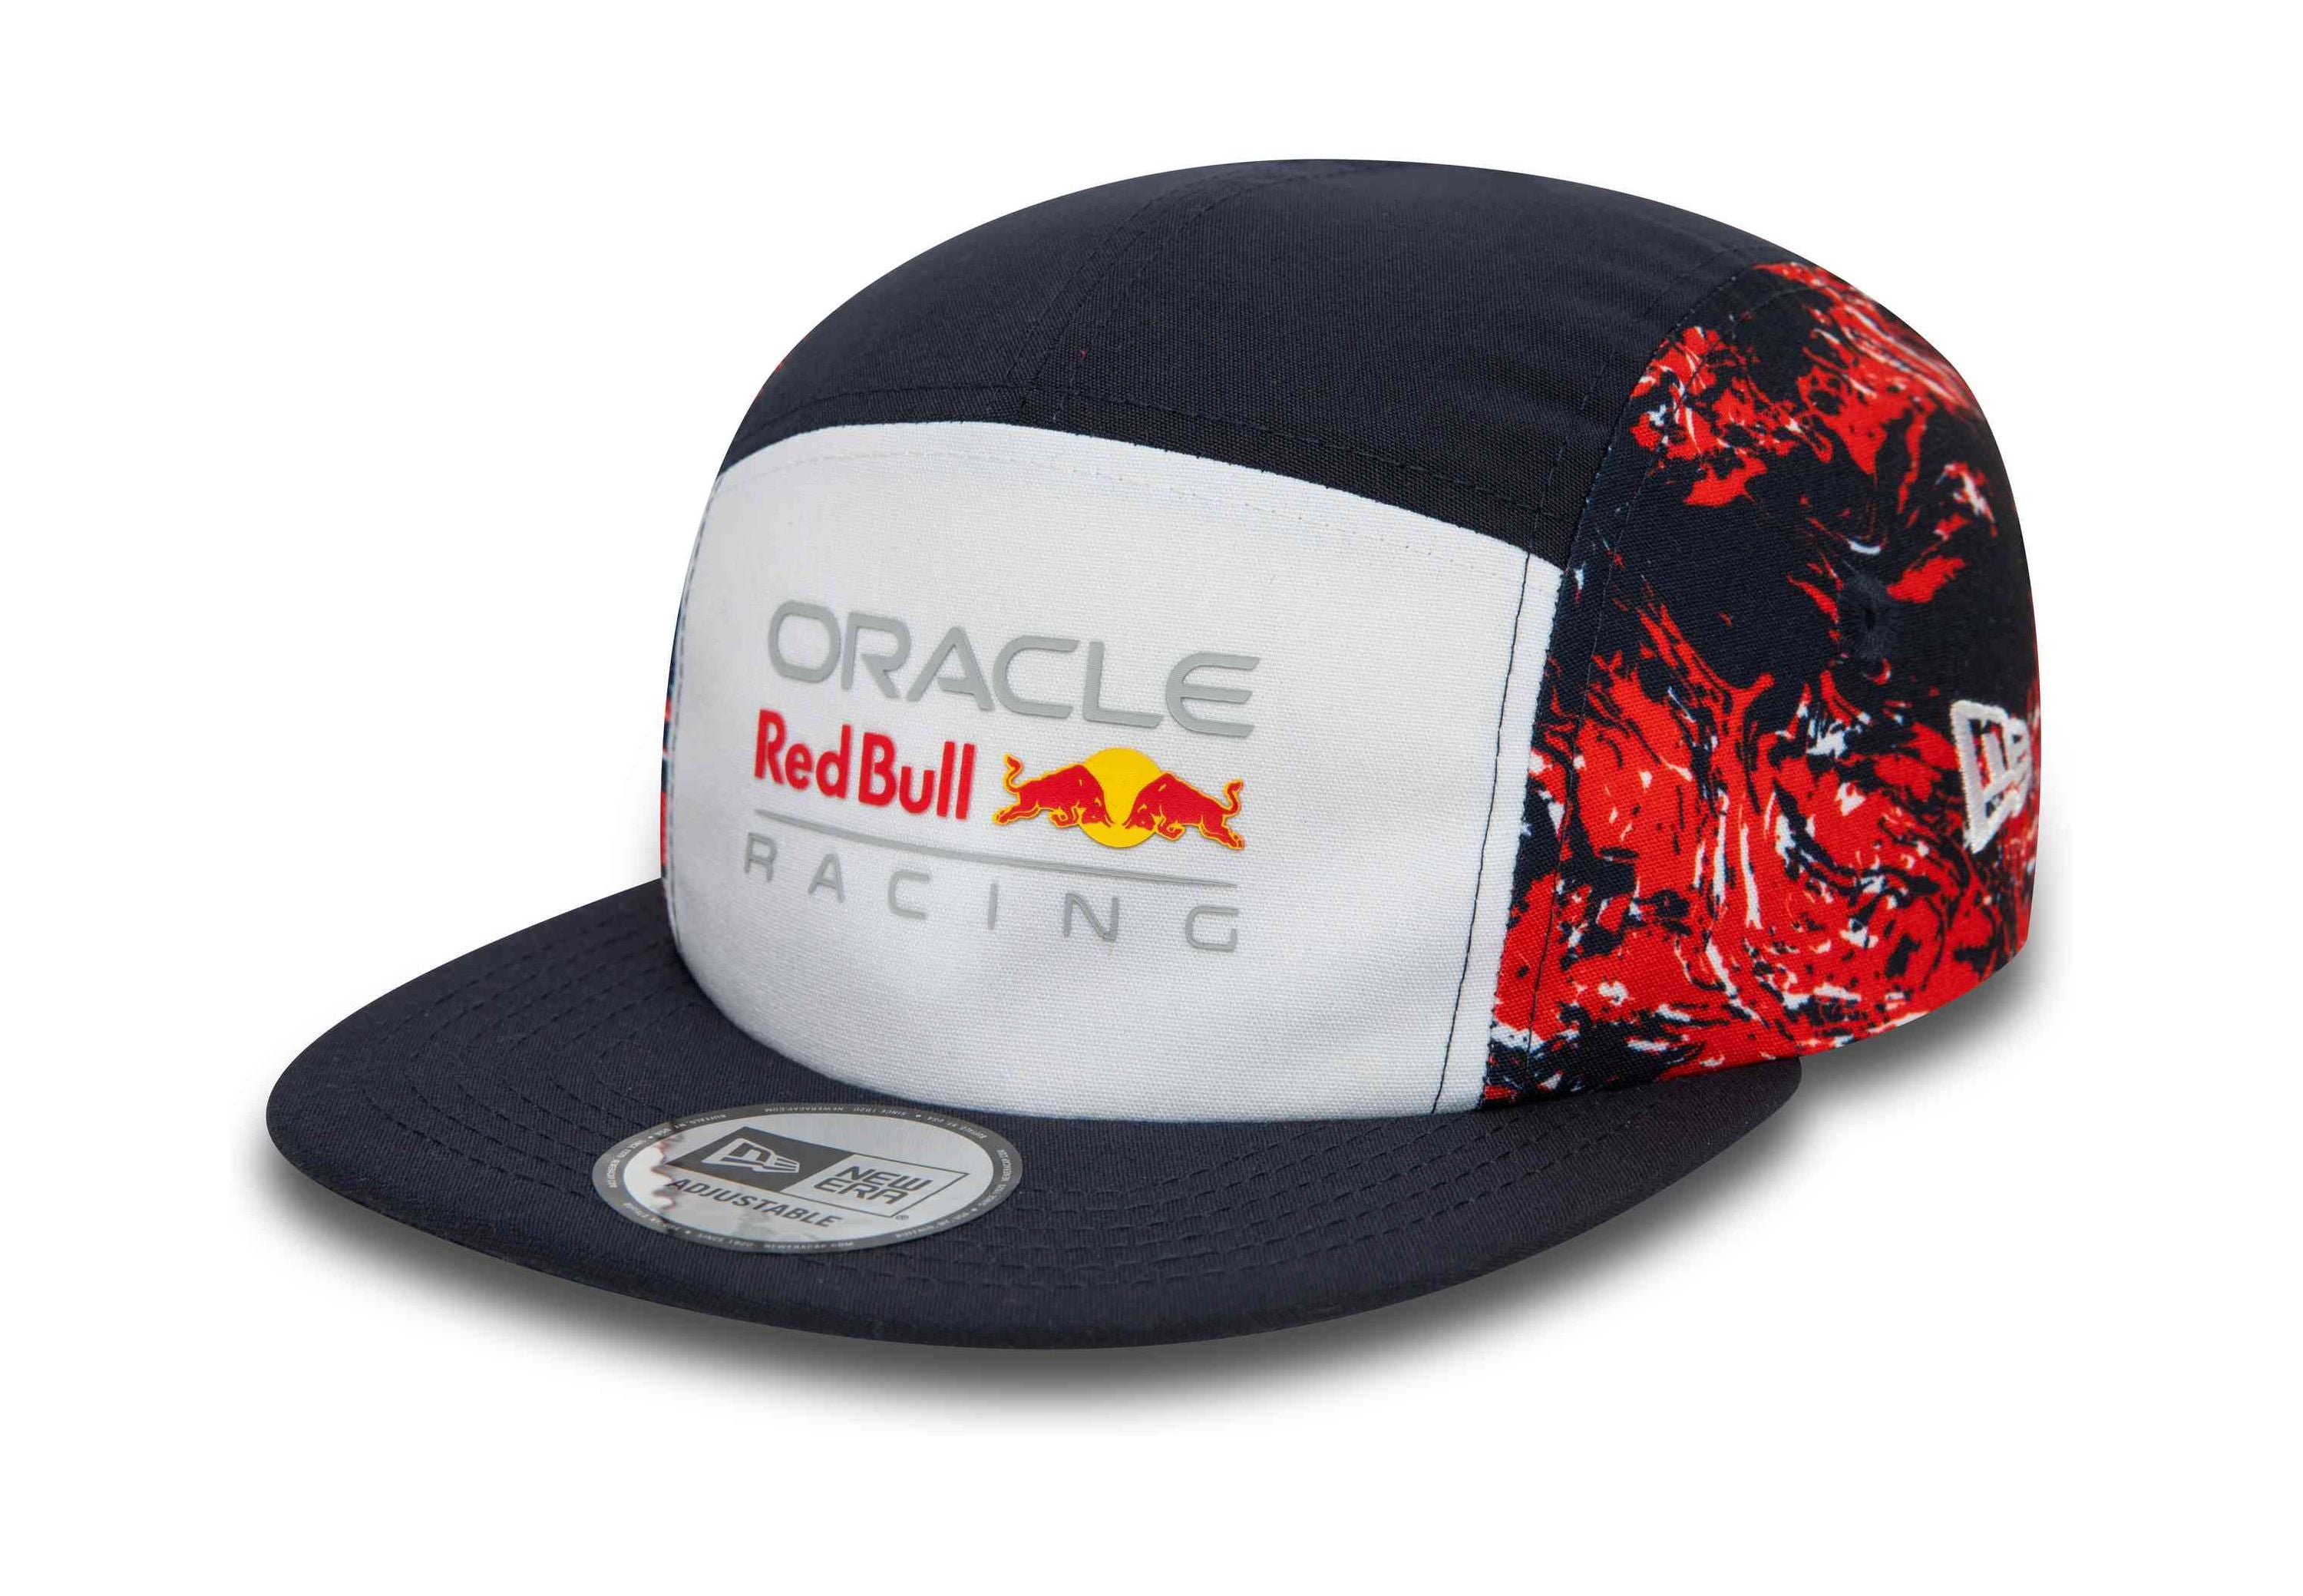 New Era - Oracle Red Bull Racing All Over Print Camper Strapback Cap